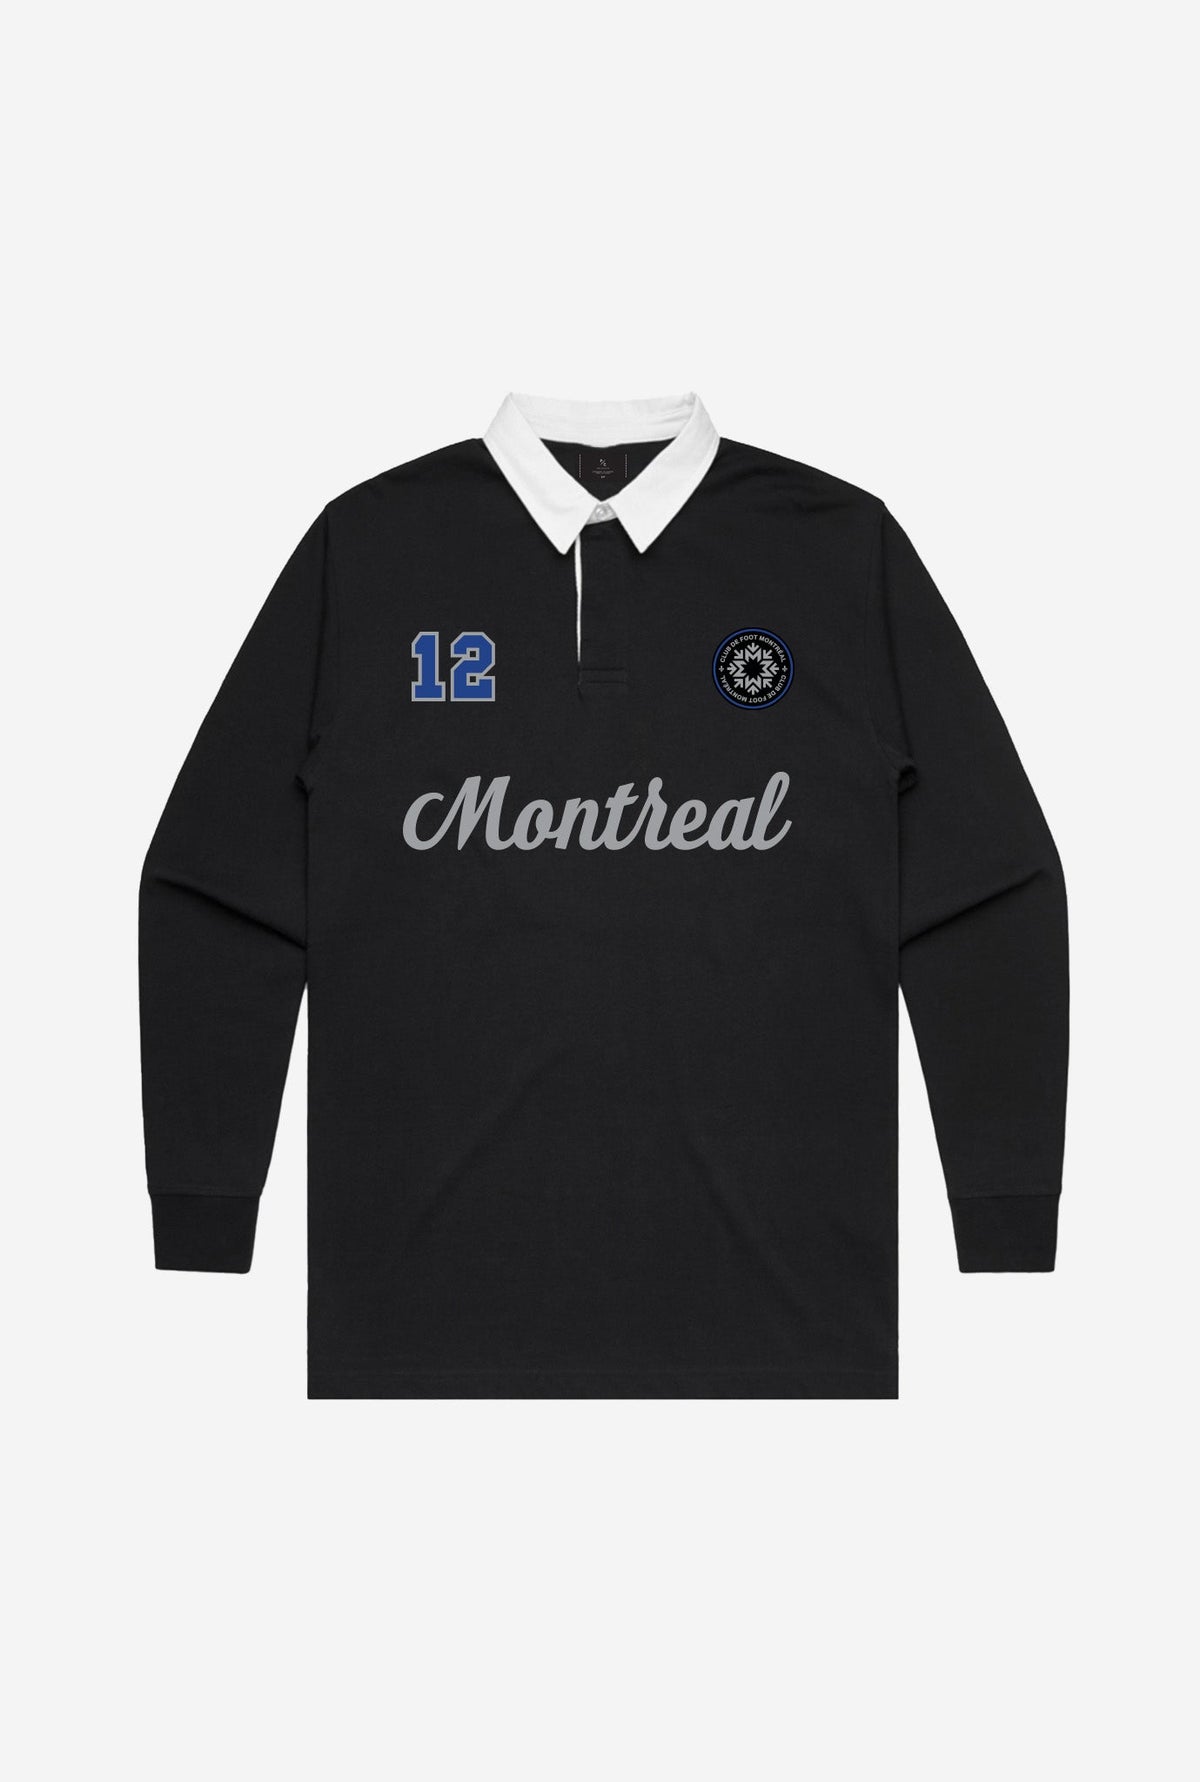 CF Montreal Emblem Rugby - Black